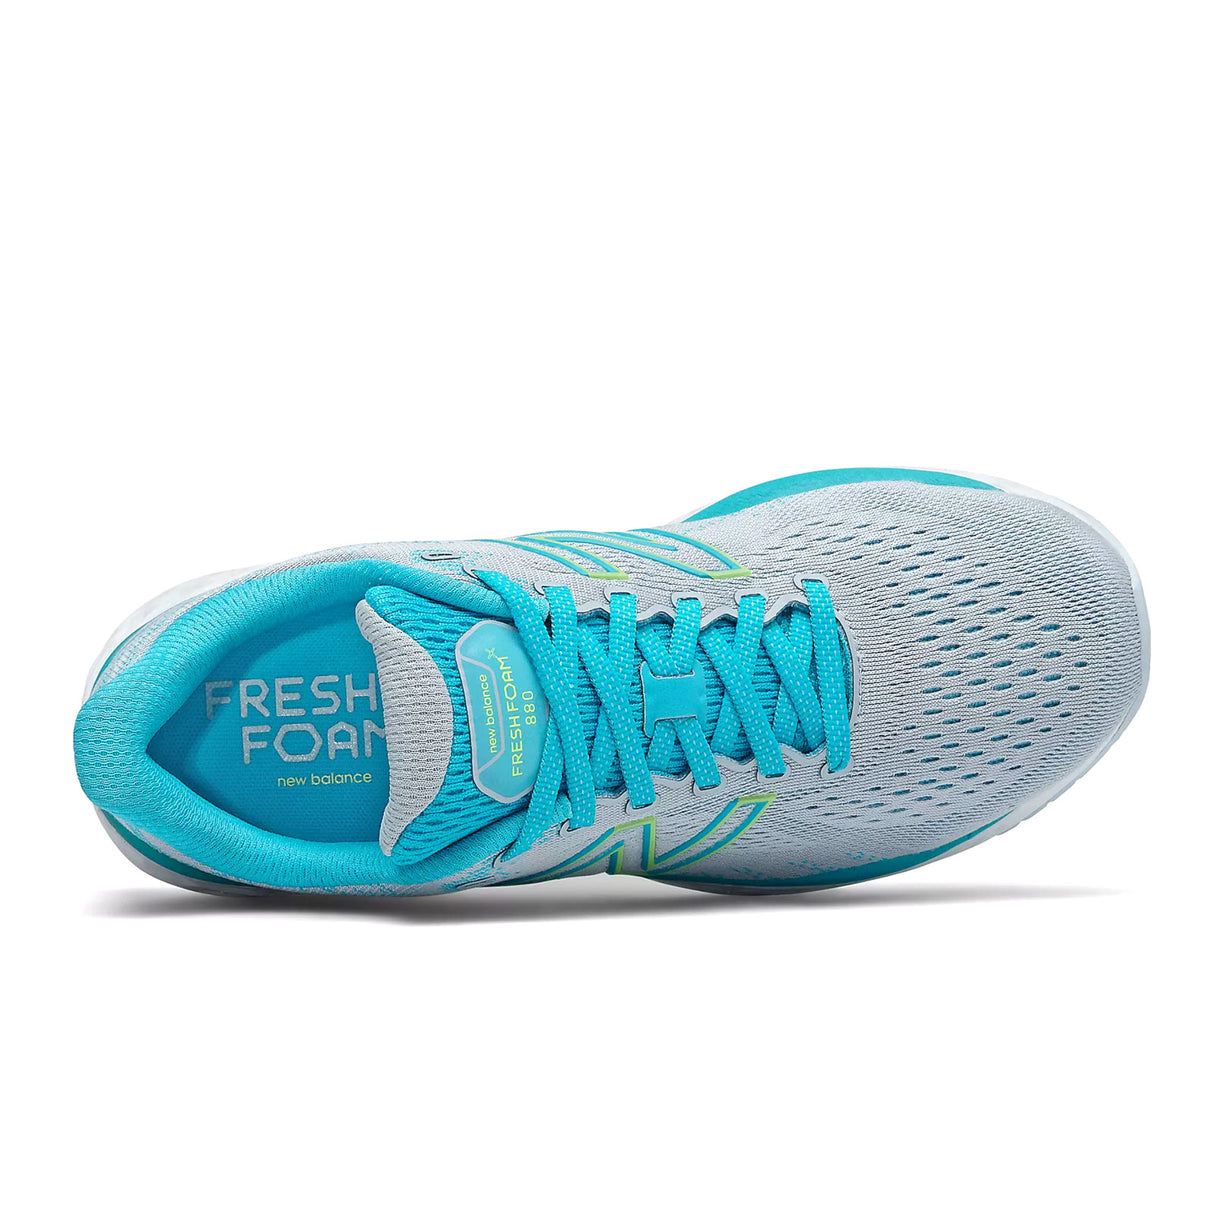 New Balance Fresh Foam 880 v11 Running Shoe (Women) - Light Cyclone Athletic - Running - Stability - The Heel Shoe Fitters